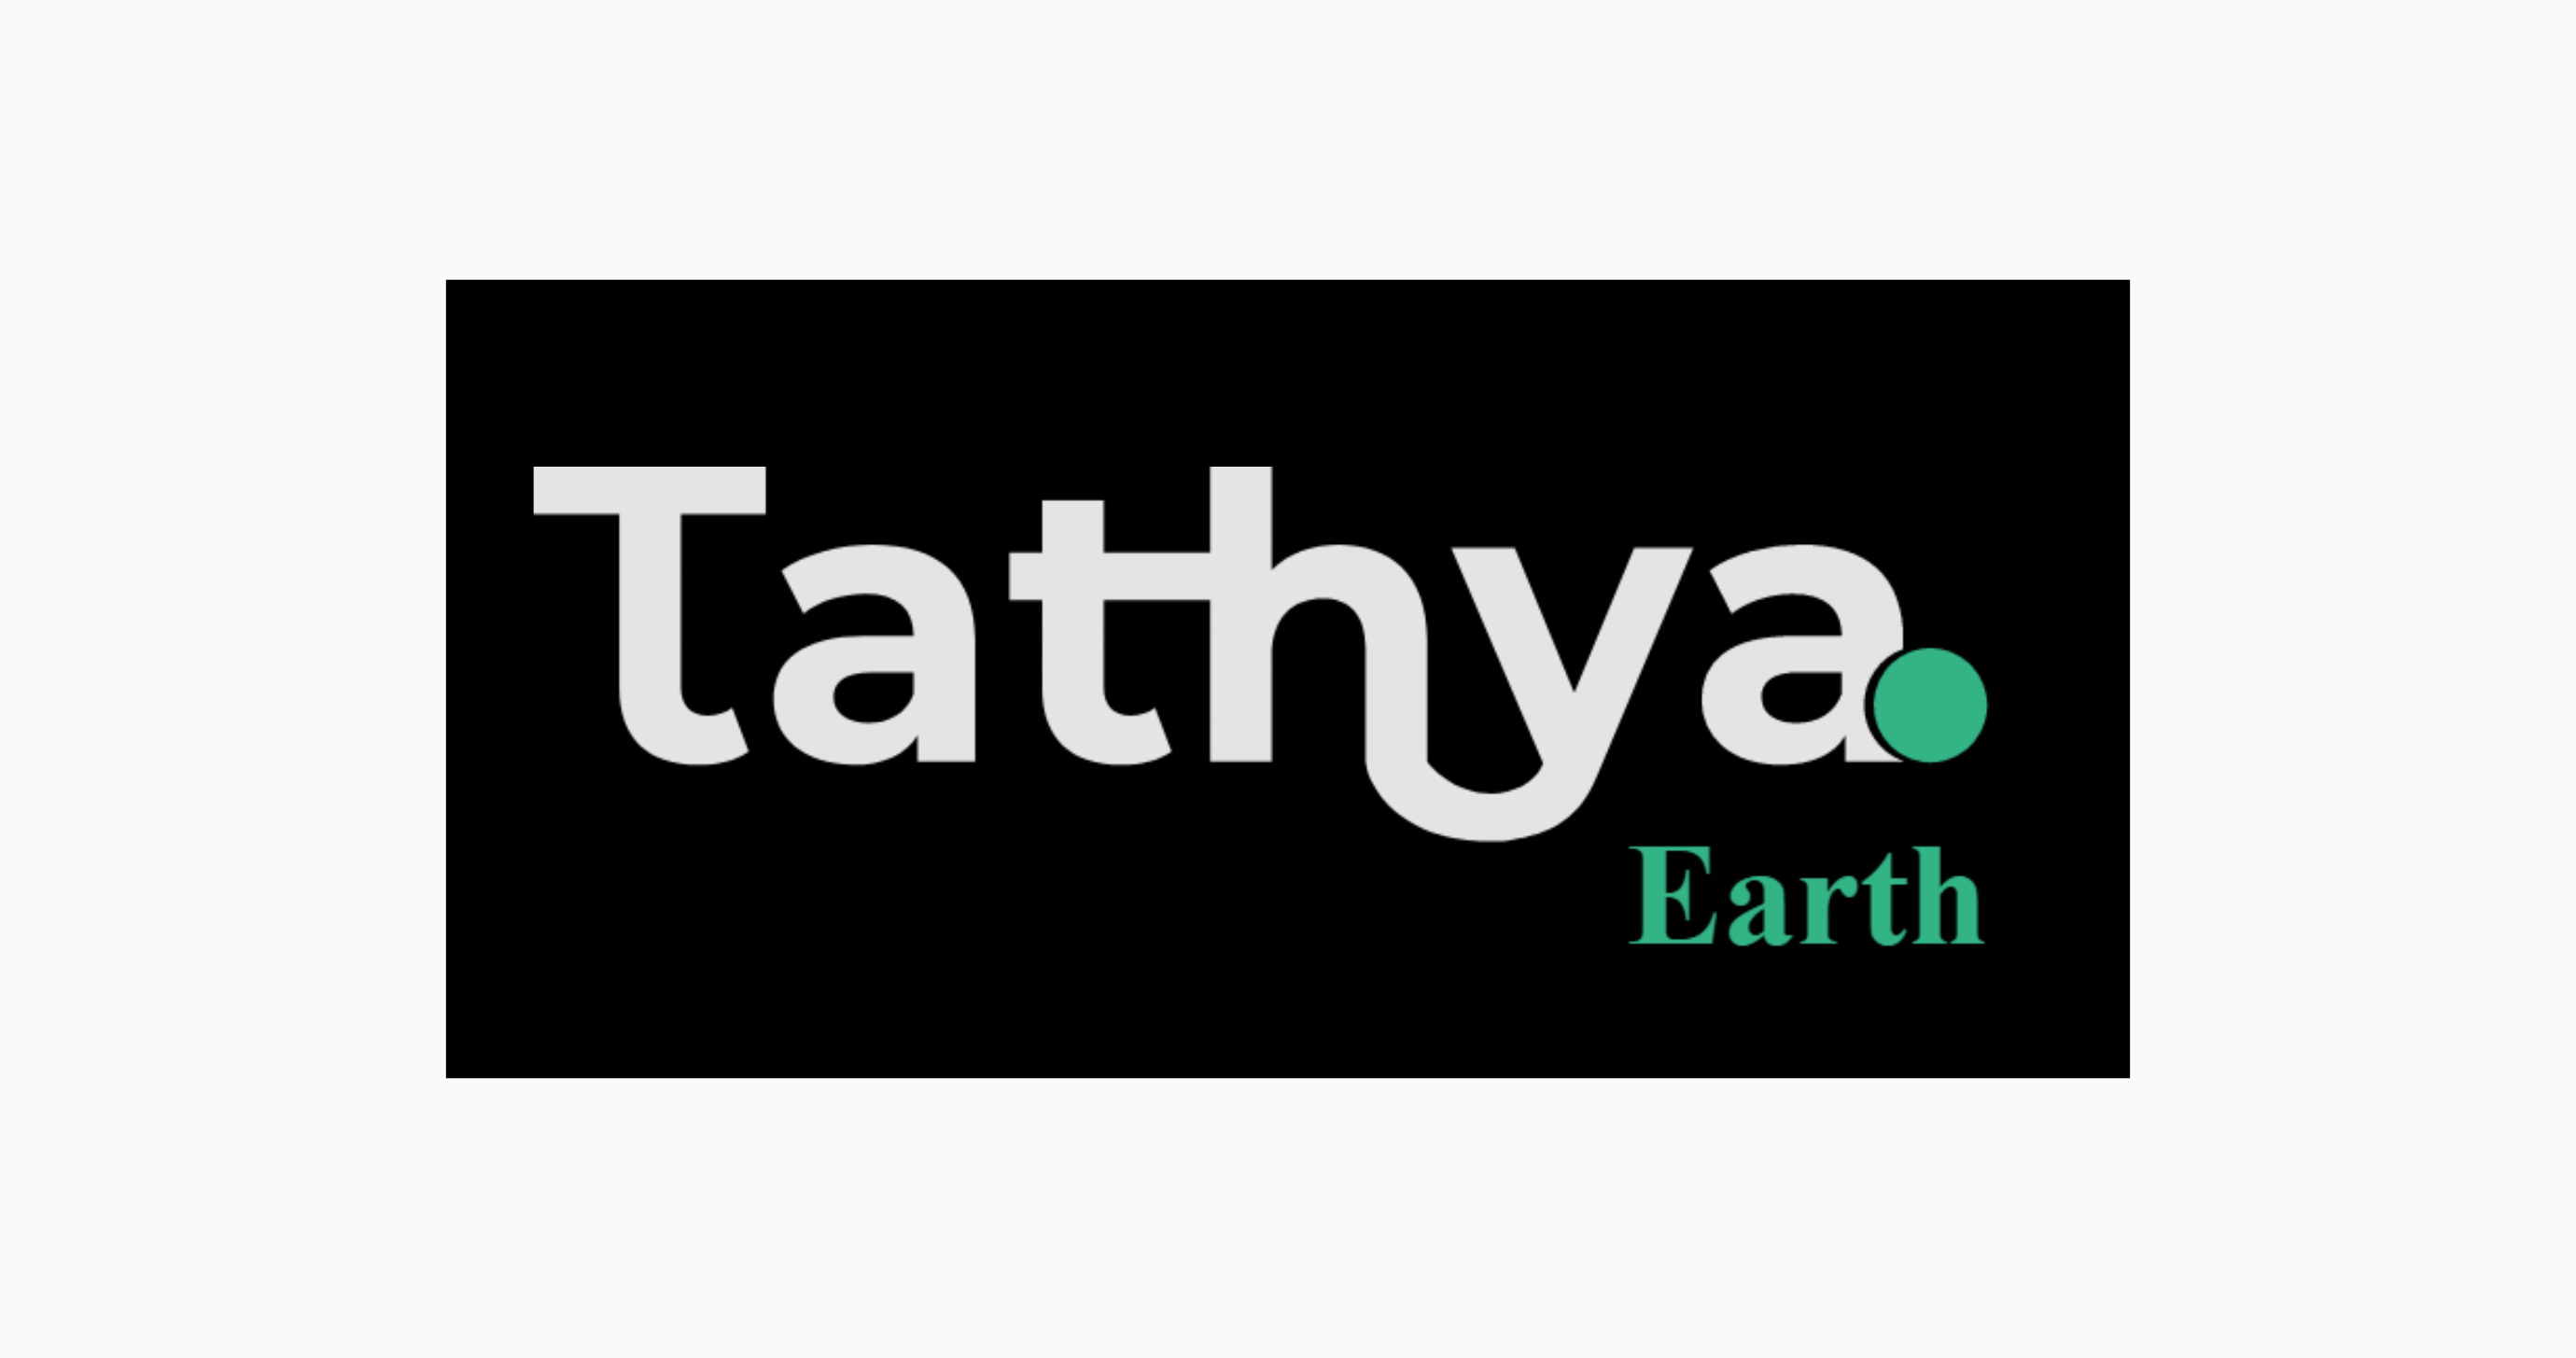 Tathya Earth